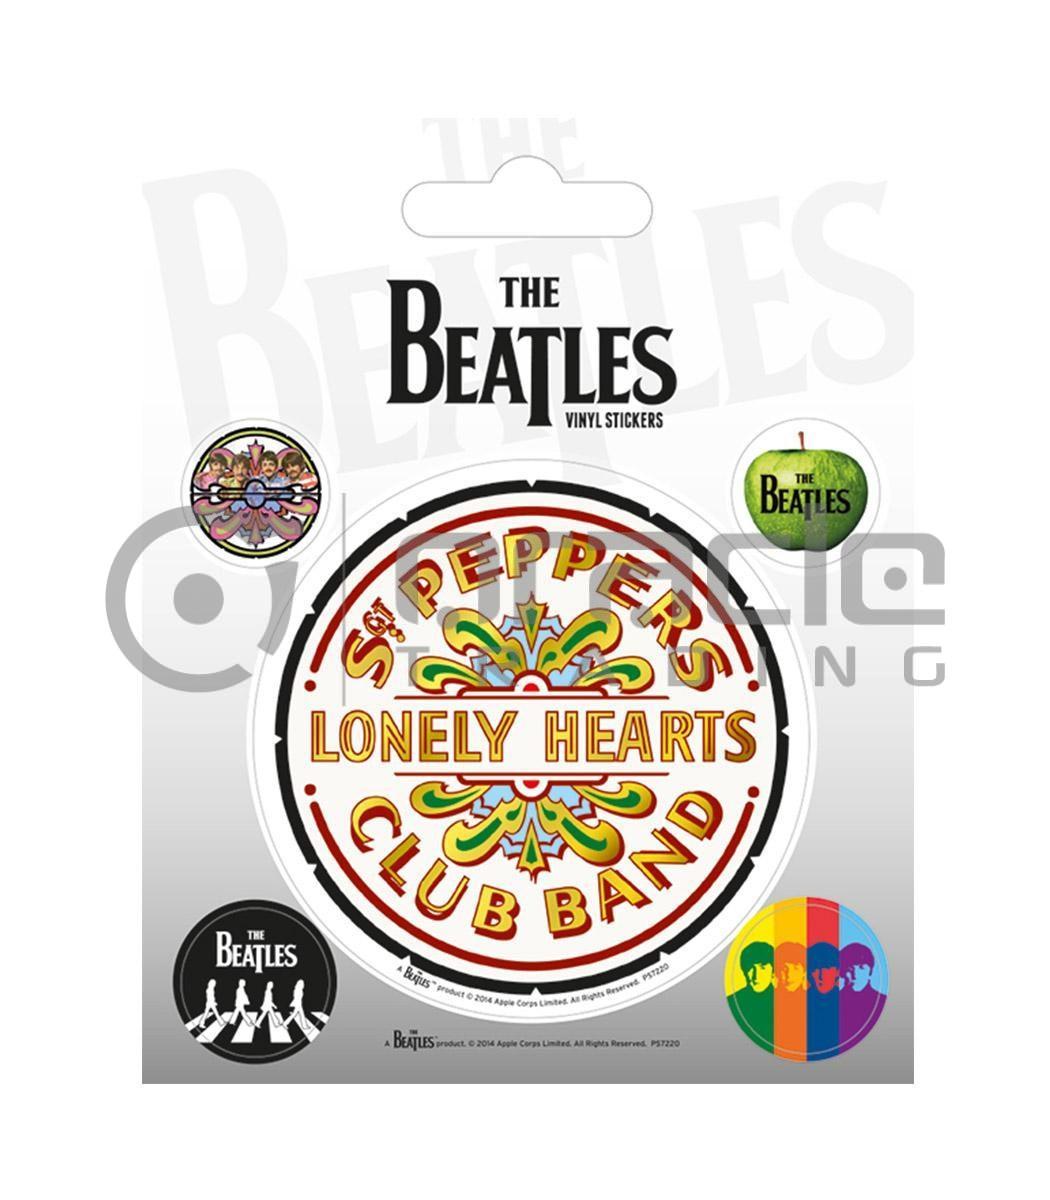 The Beatles Vinyl Sticker Pack - Sgt. Pepper